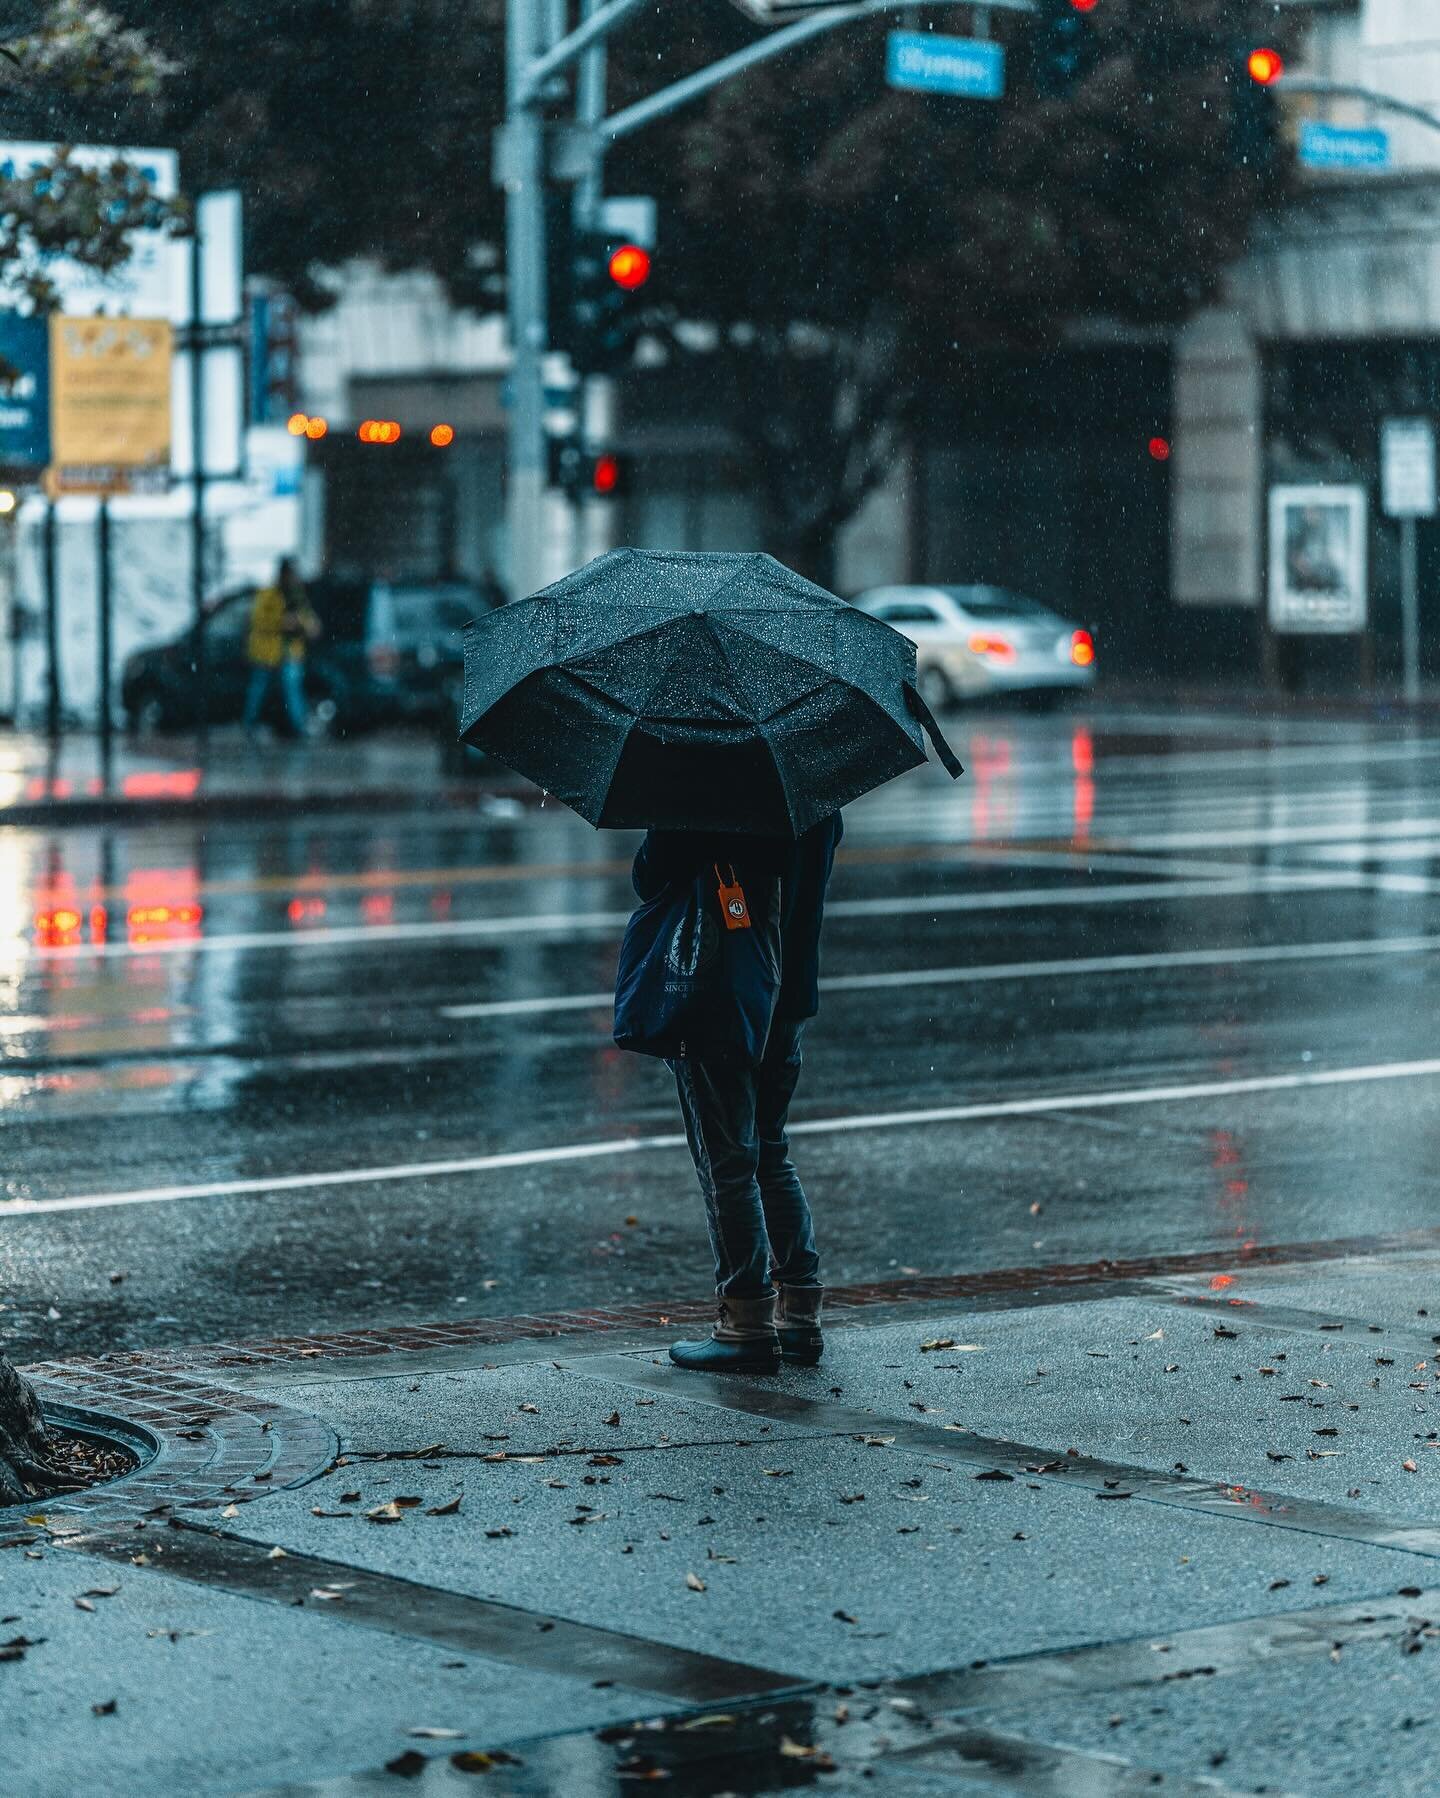 Raining.

Camera: Sony A7Riii @sonyalpha
Lens: Sigma 85mm f/1.4 @sigmauk

#losangelesphotographer
#streetphotography 
#creative_optic
#dof_addicts
#opticalwander 
#losangeles
#photooftheday 
#sonyalpha
#moodyedits
#visualgrams

#rainphotography 
#mad